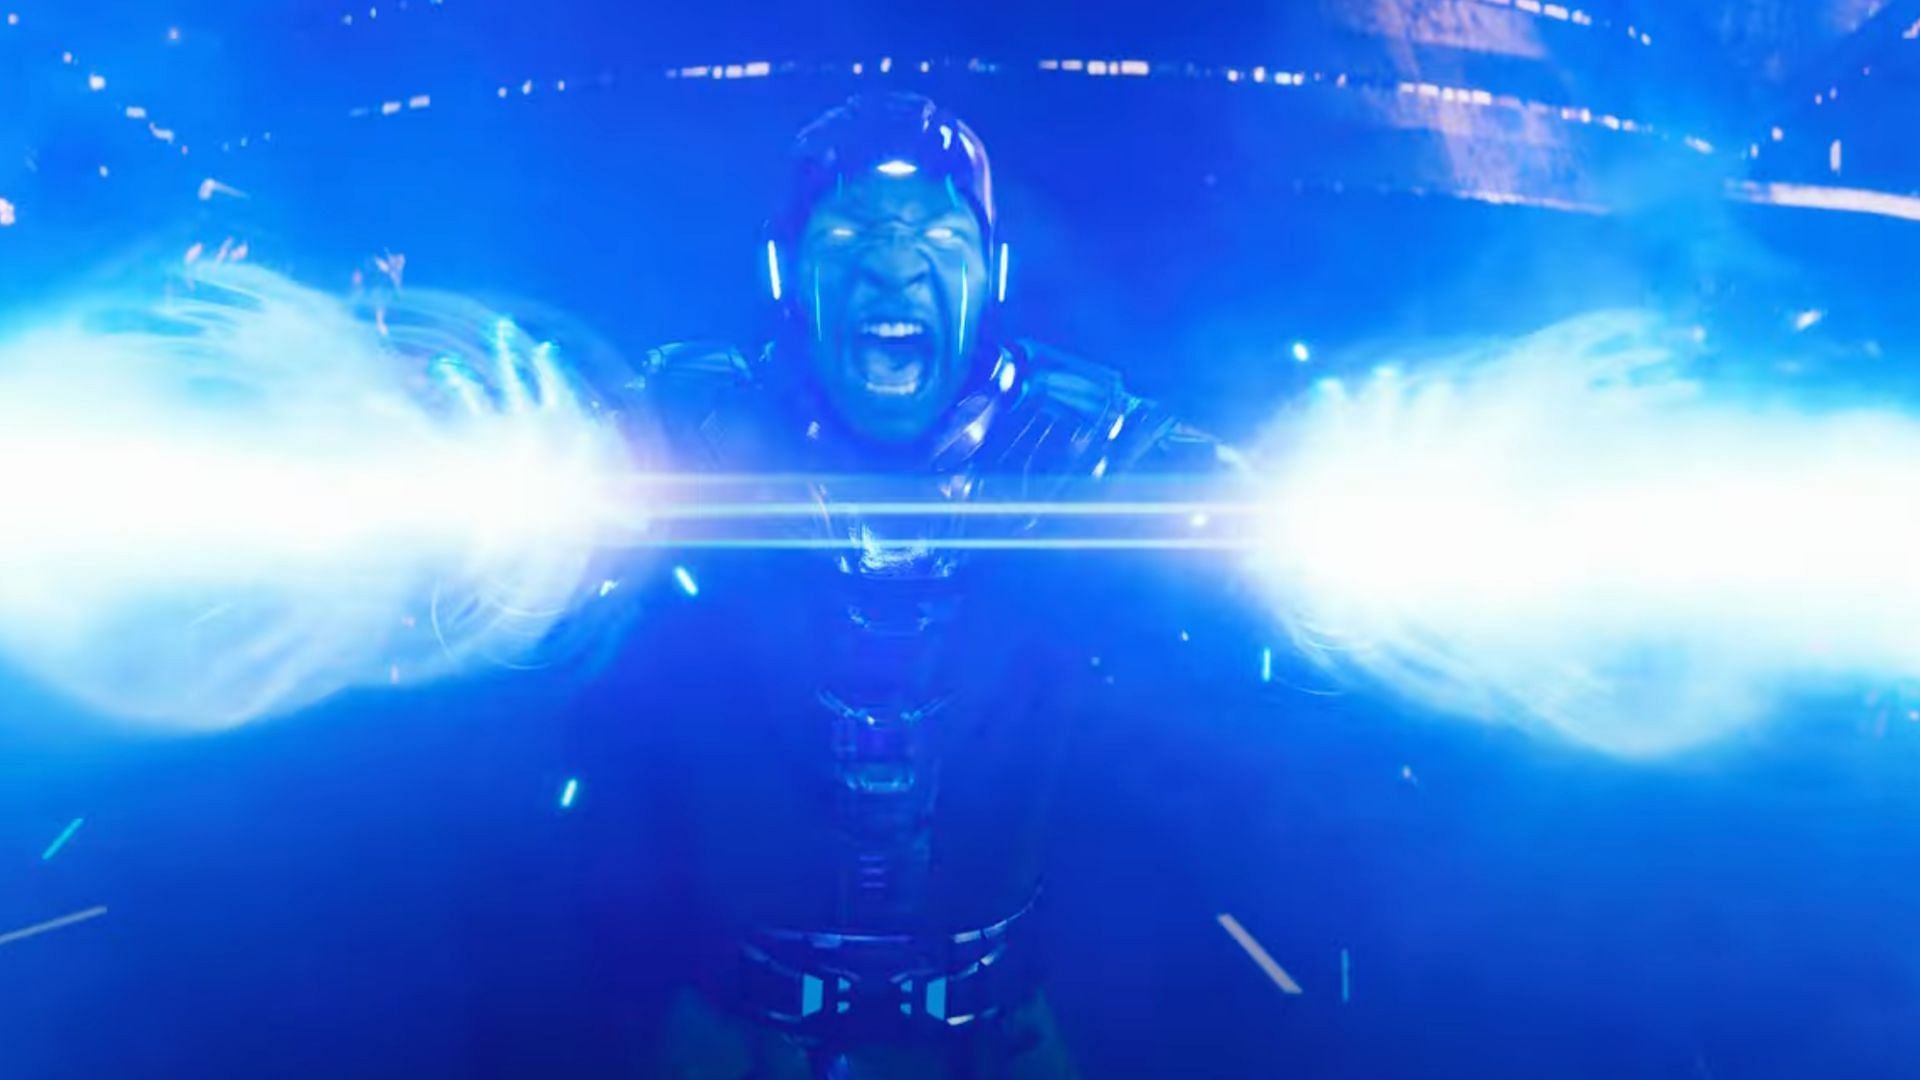 Jonathan Majors's portrayal of Kang the Conqueror has been praised (Image via Marvel Studios)